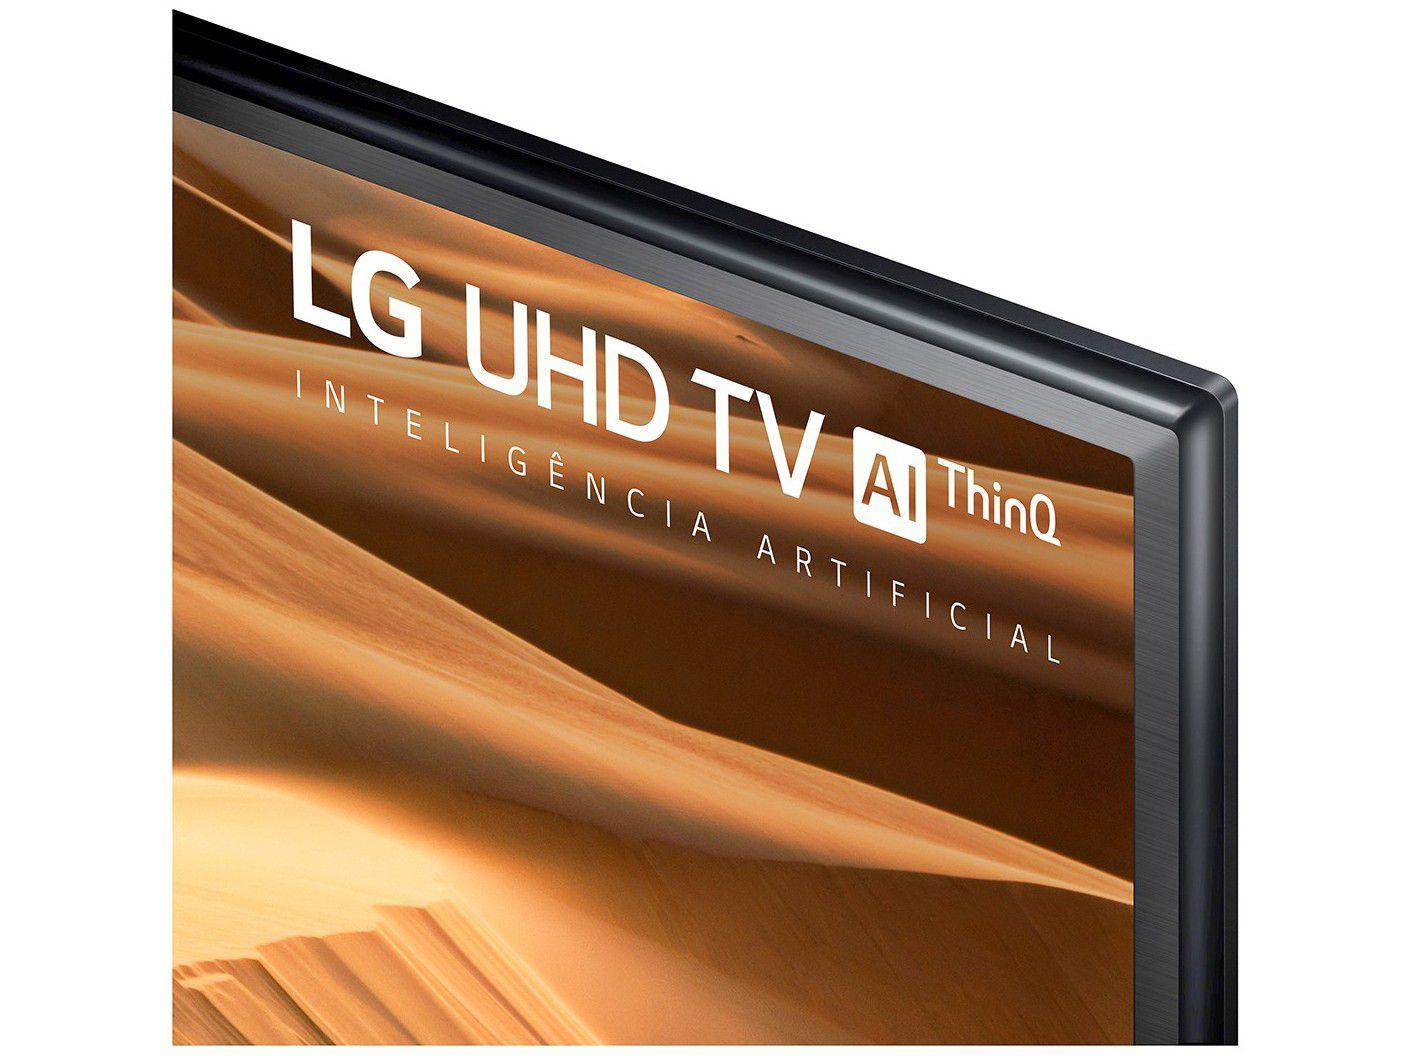 Smart Tv 4k Led 60” Lg 60um7270psa Wi Fi Hdr Inteligência Artificial